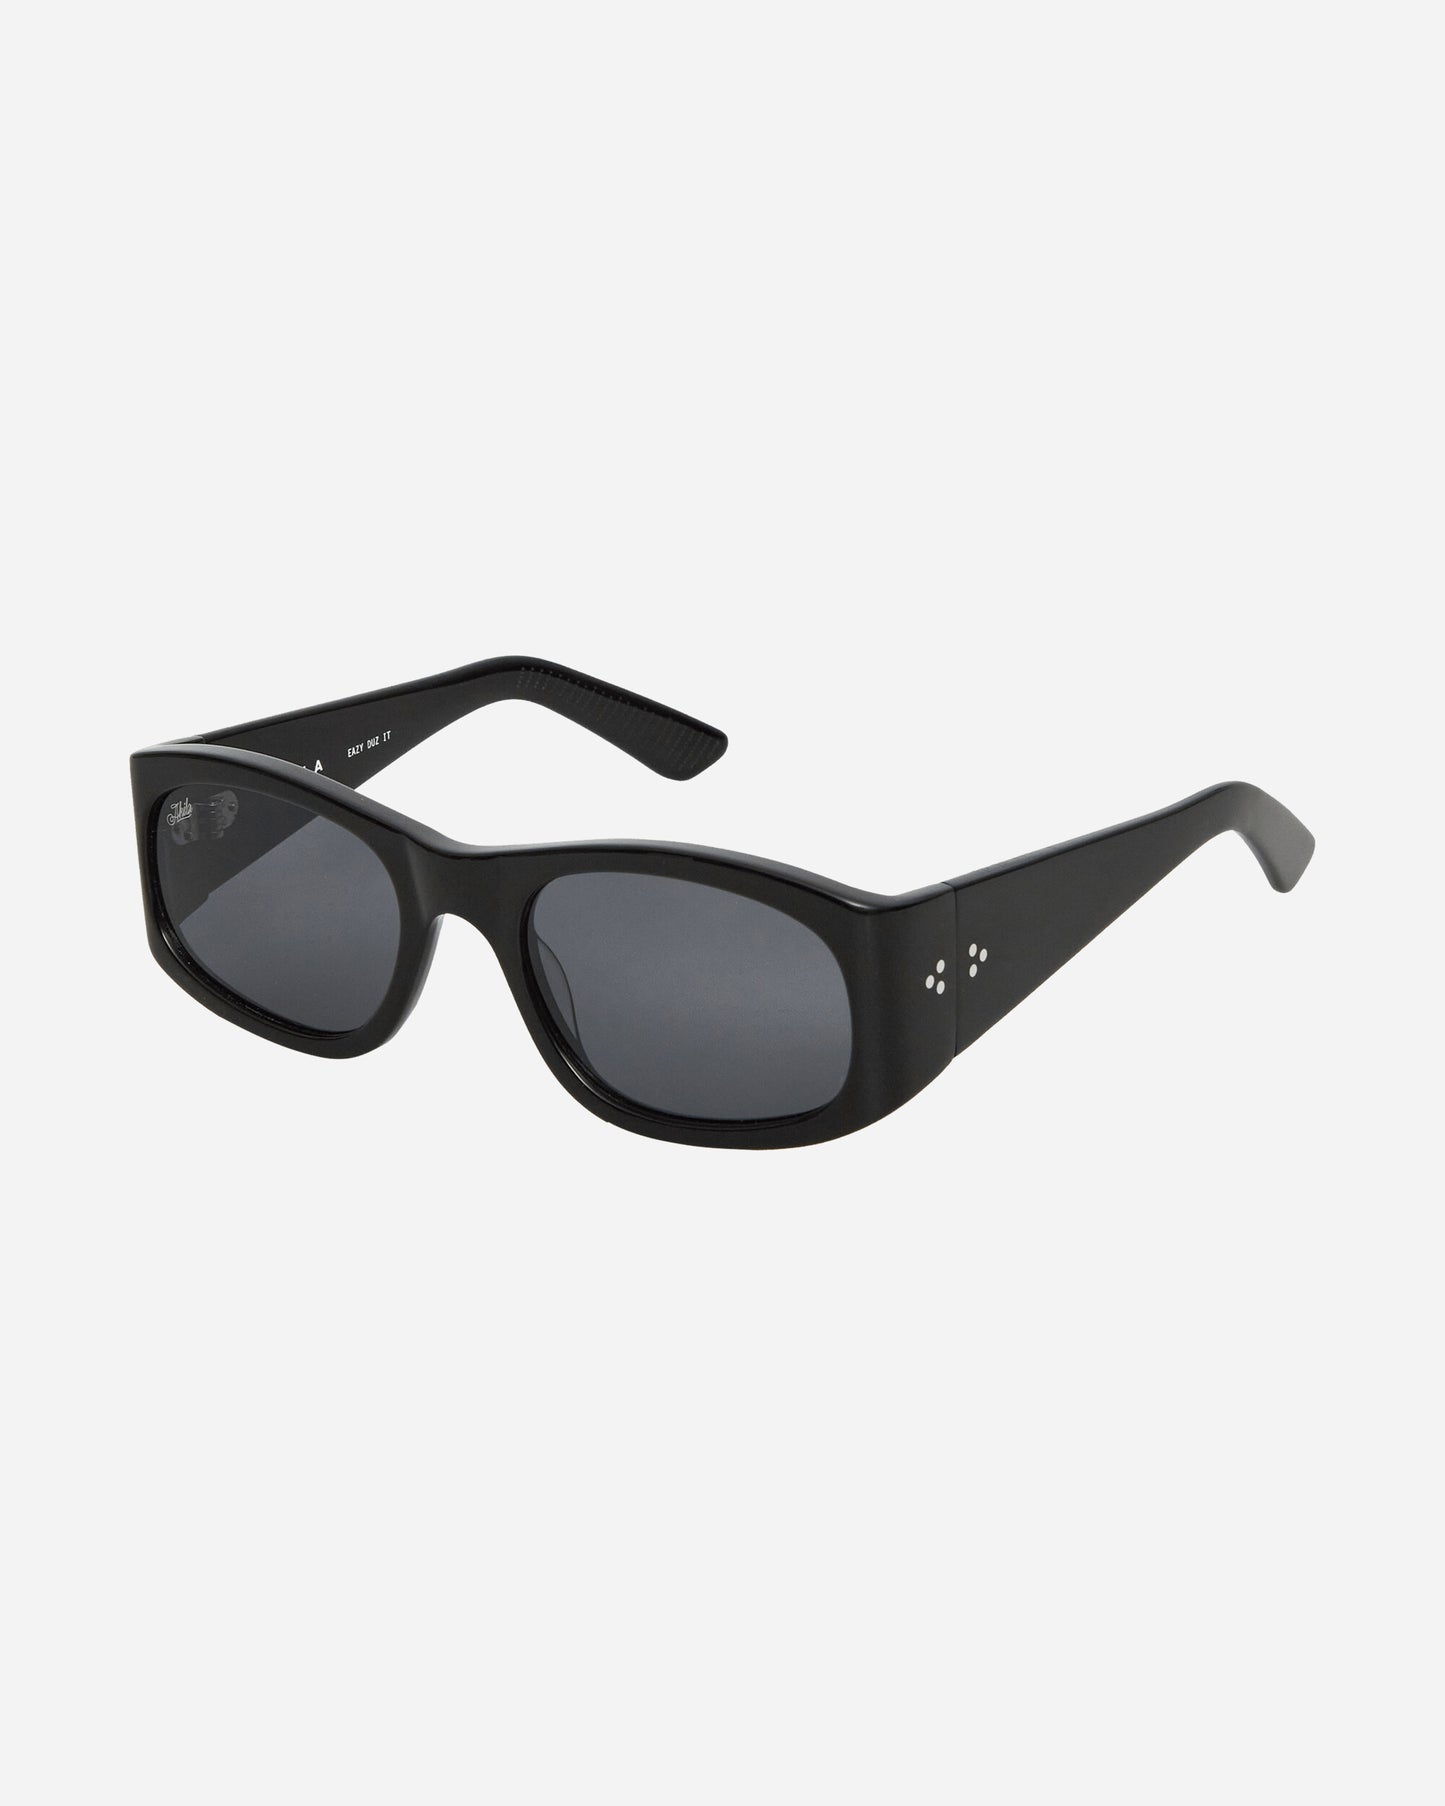 AKILA Eazy Black Eyewear Sunglasses 213401 01